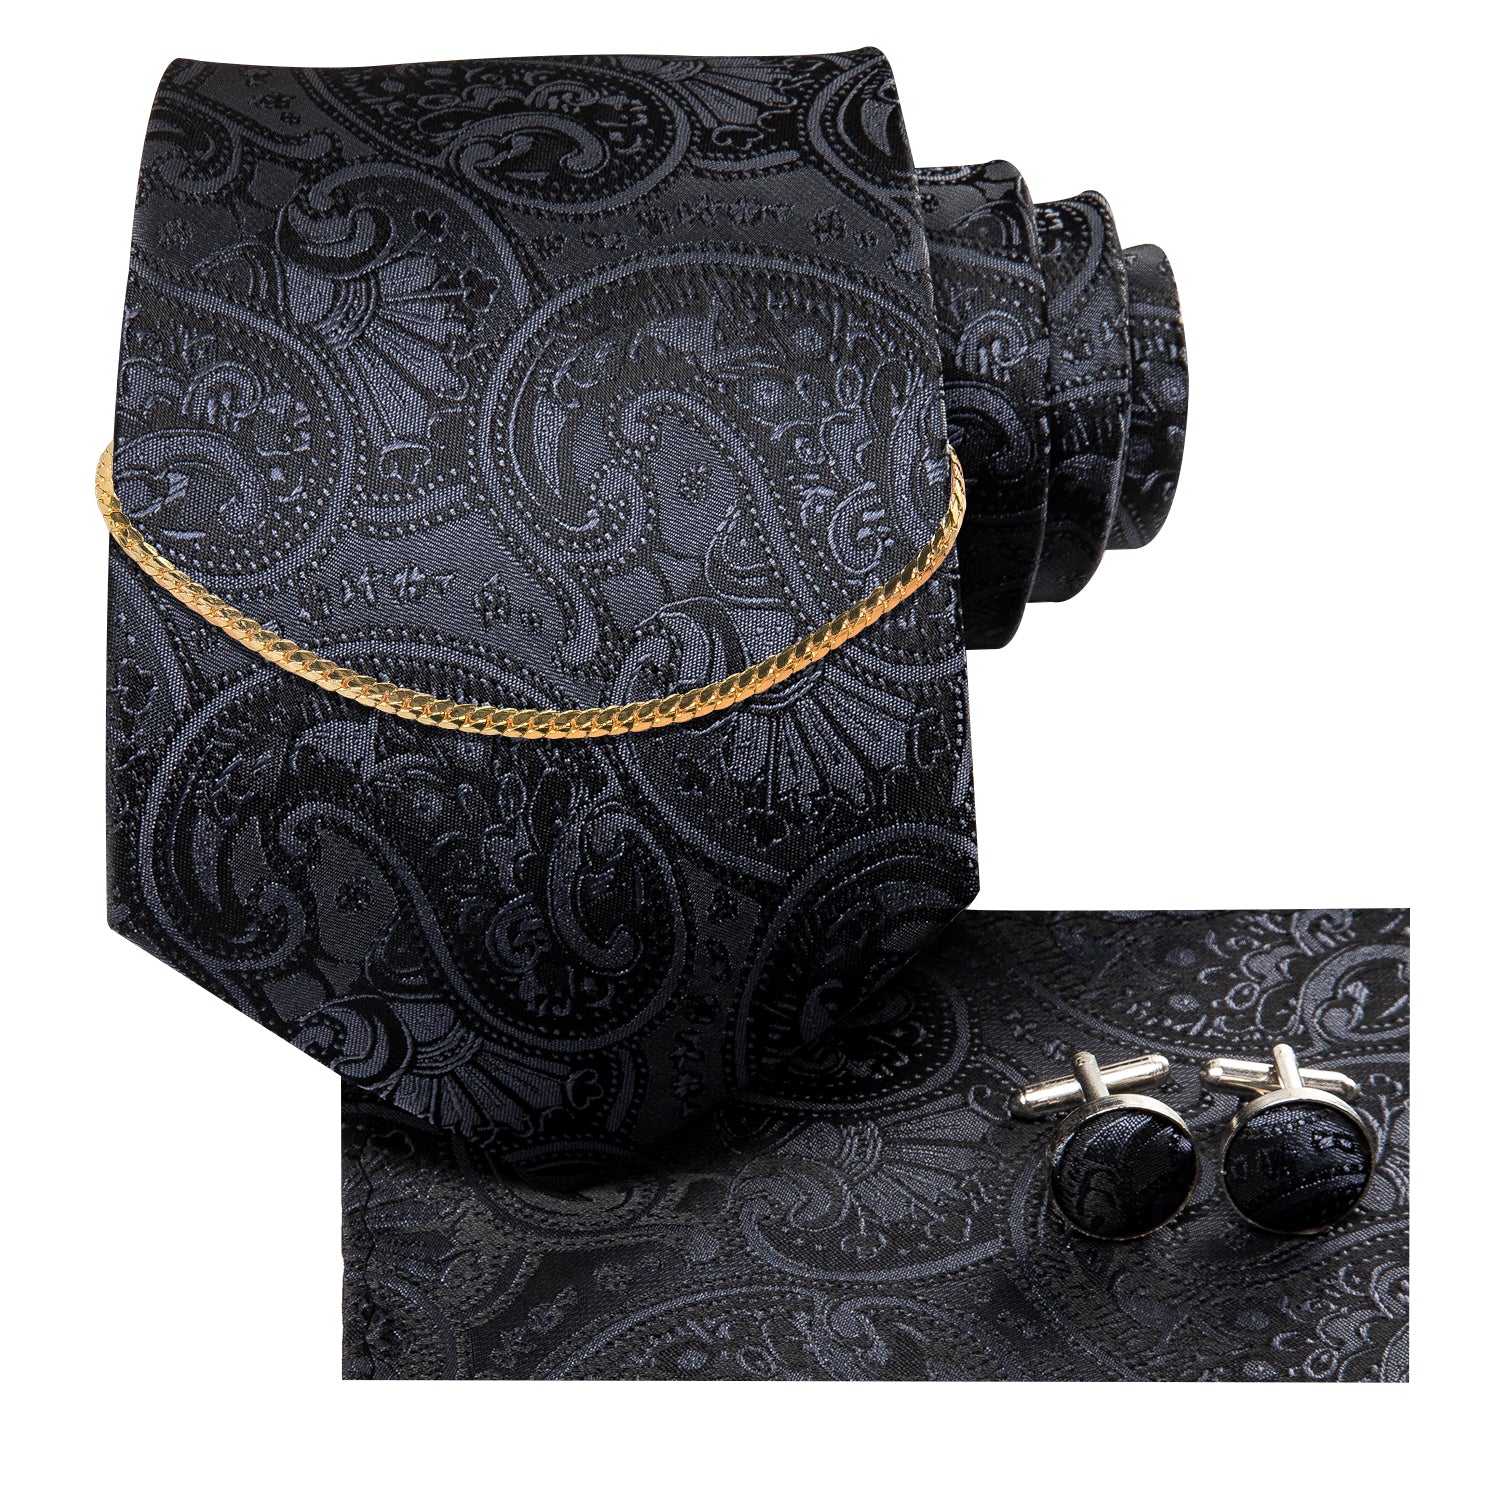 Classic Black Floral Silk Men's Tie Hanky Cufflinks Set With Golden Chain